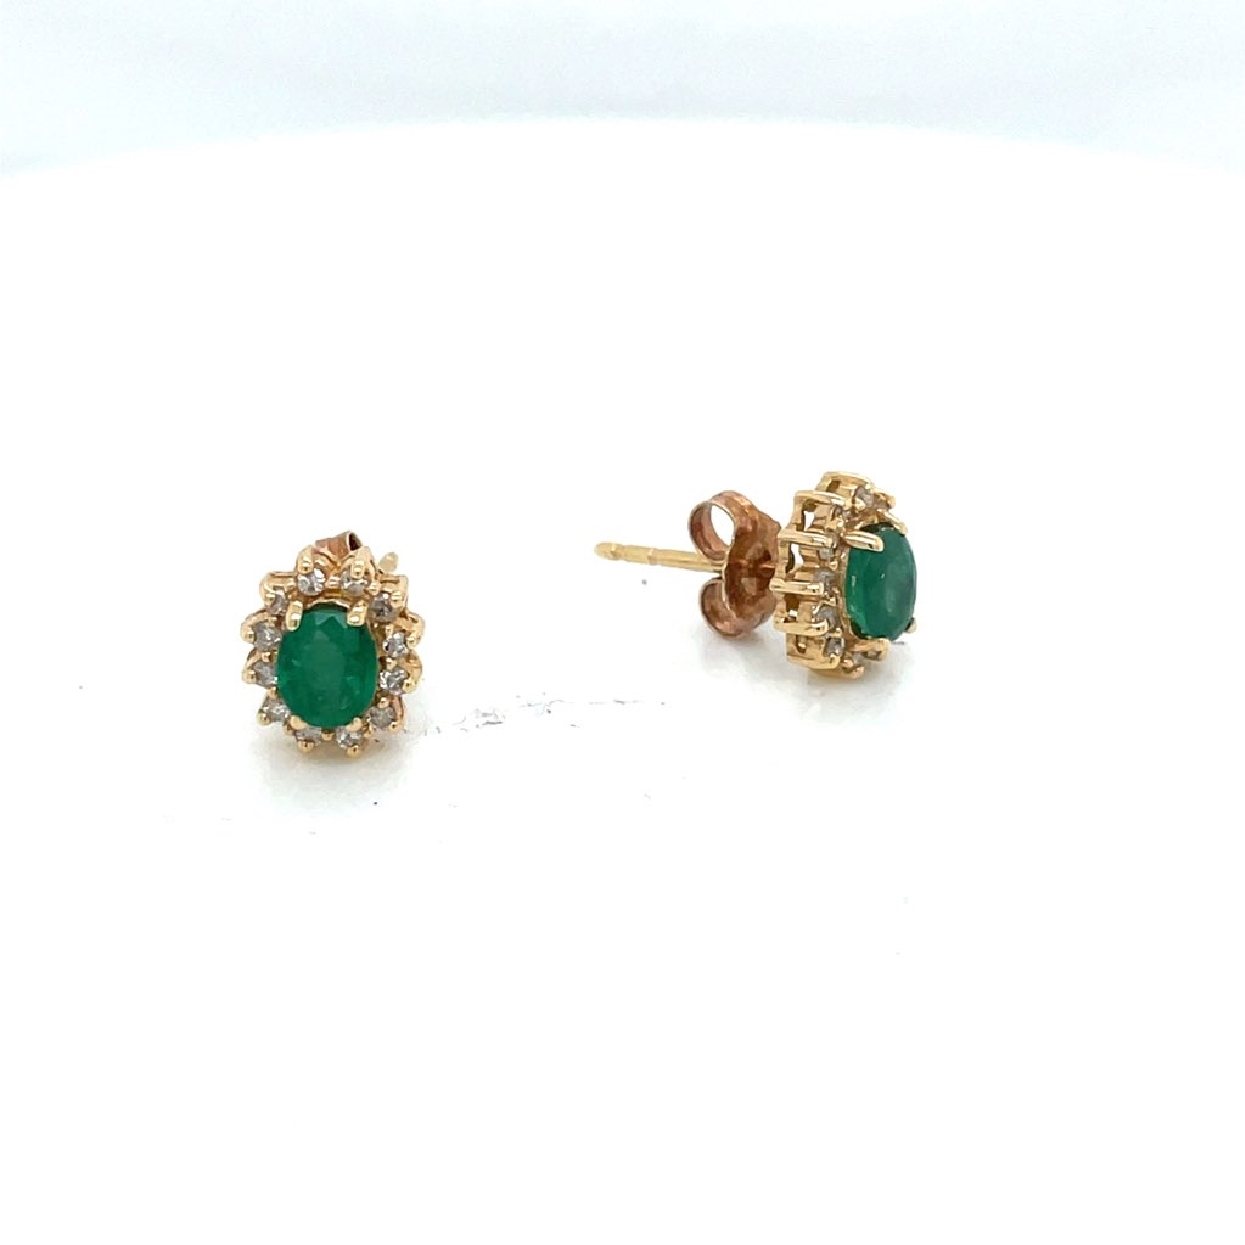 14k Yellow Gold Oval Emerald Stud Earrings with Diamond Halo

0.5cttw Emeralds
0.25cttw Diamonds 